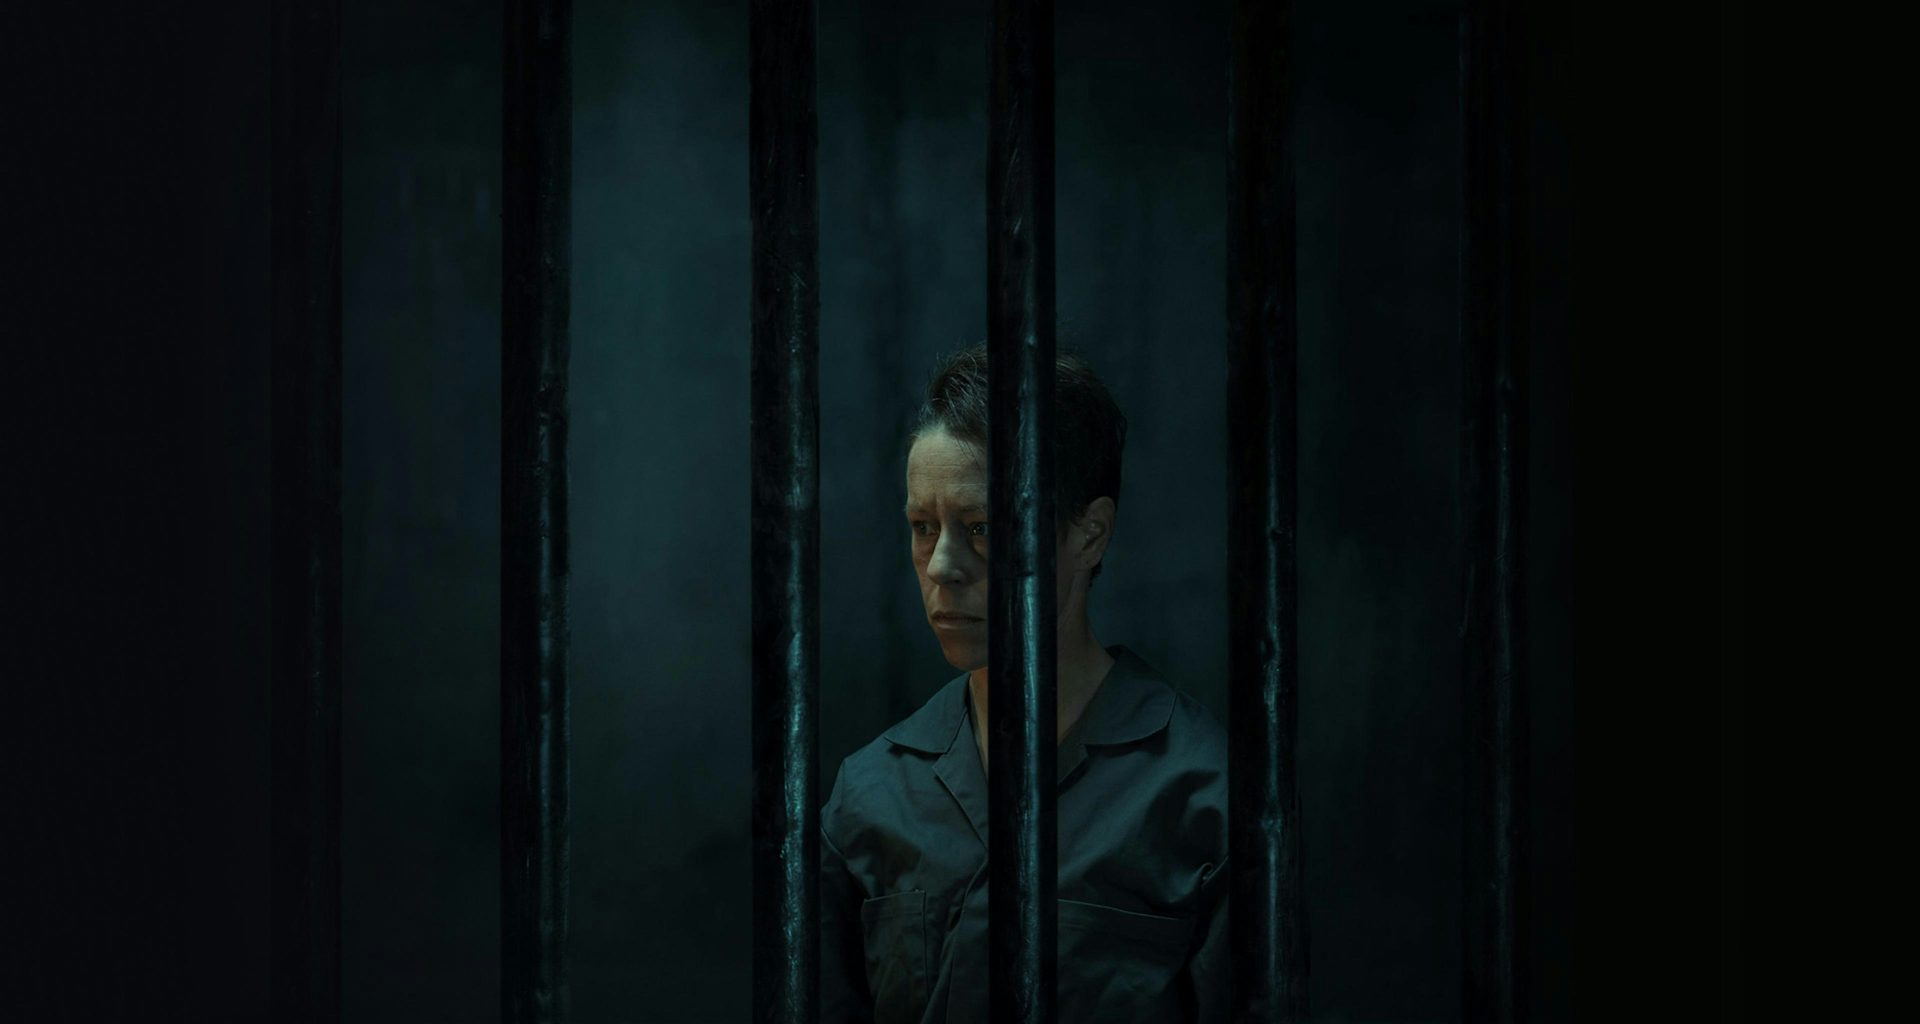 A non-binary person in a dark jail cell